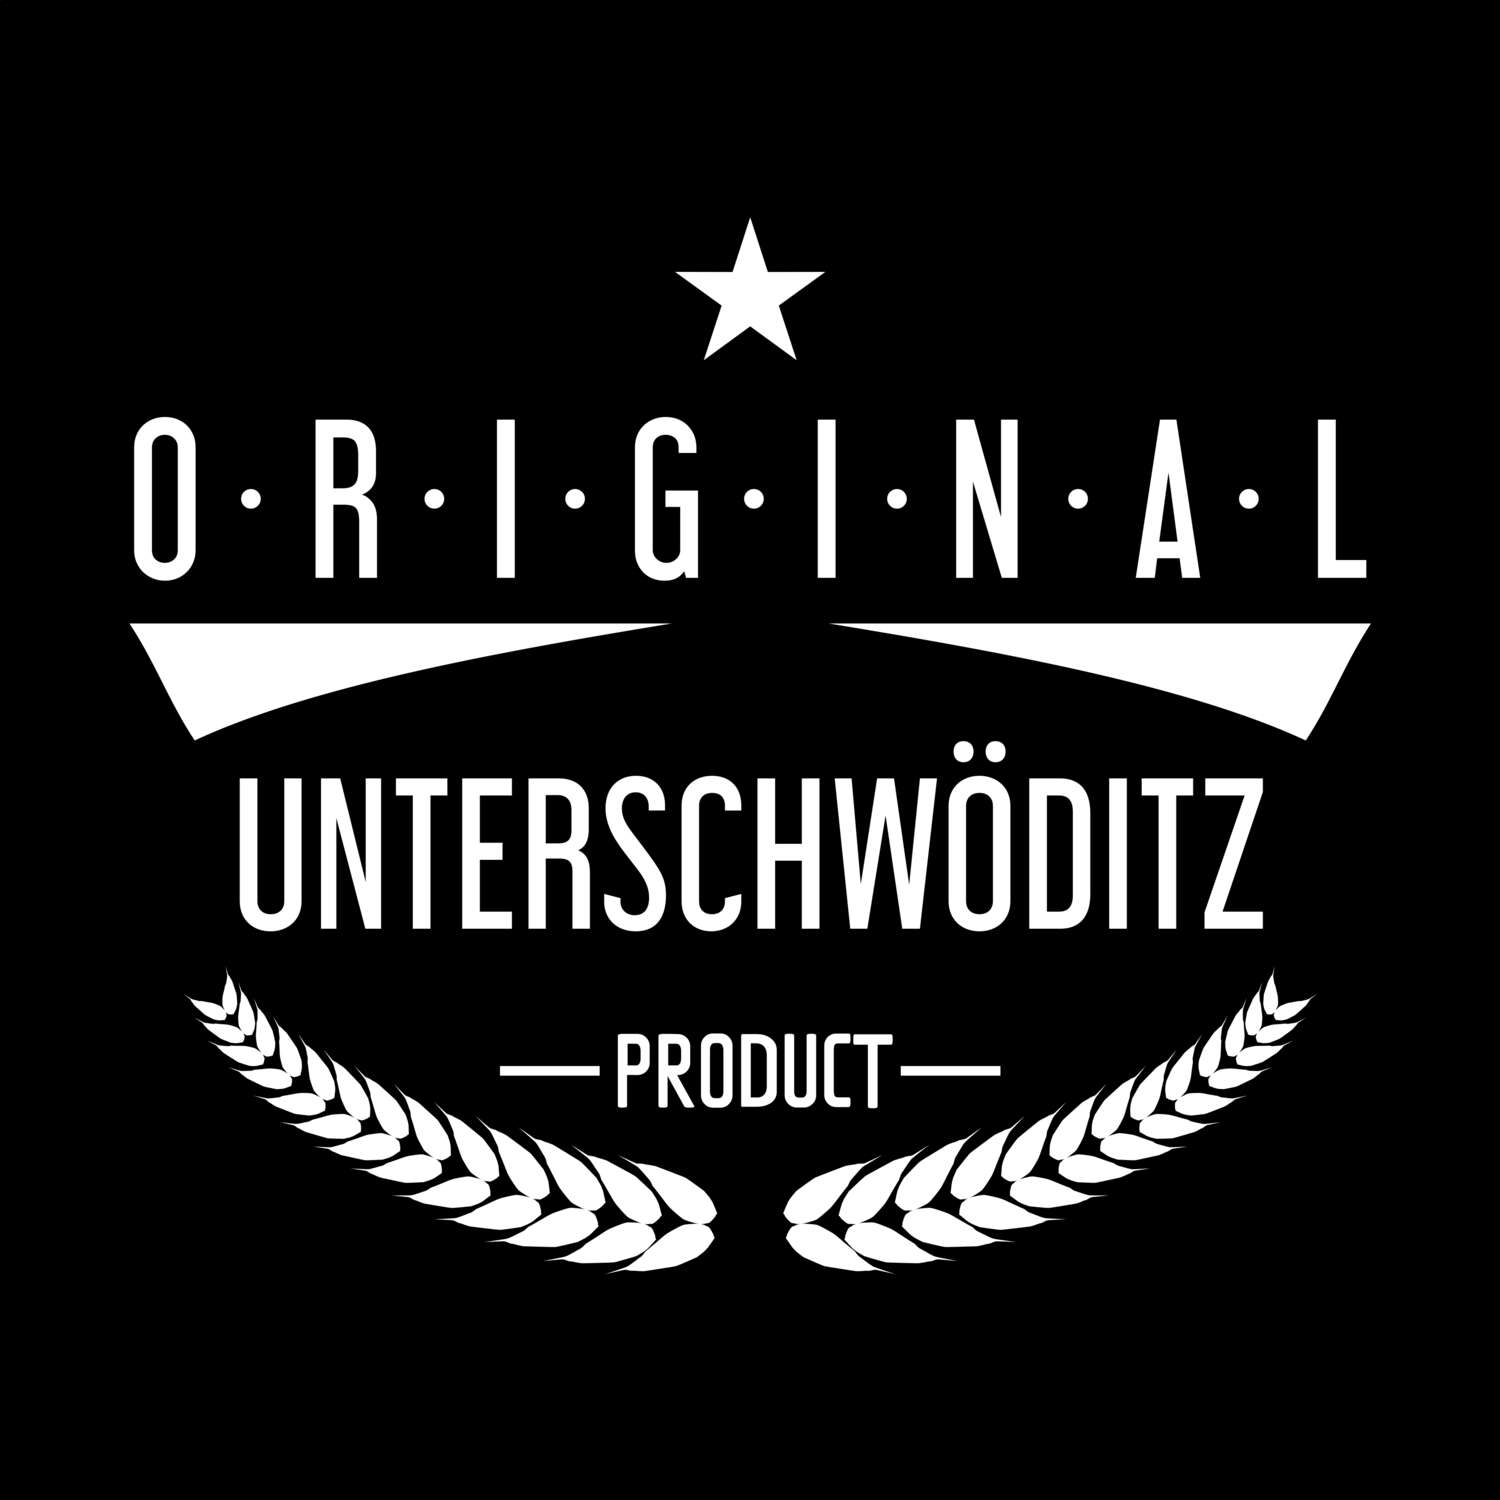 Unterschwöditz T-Shirt »Original Product«